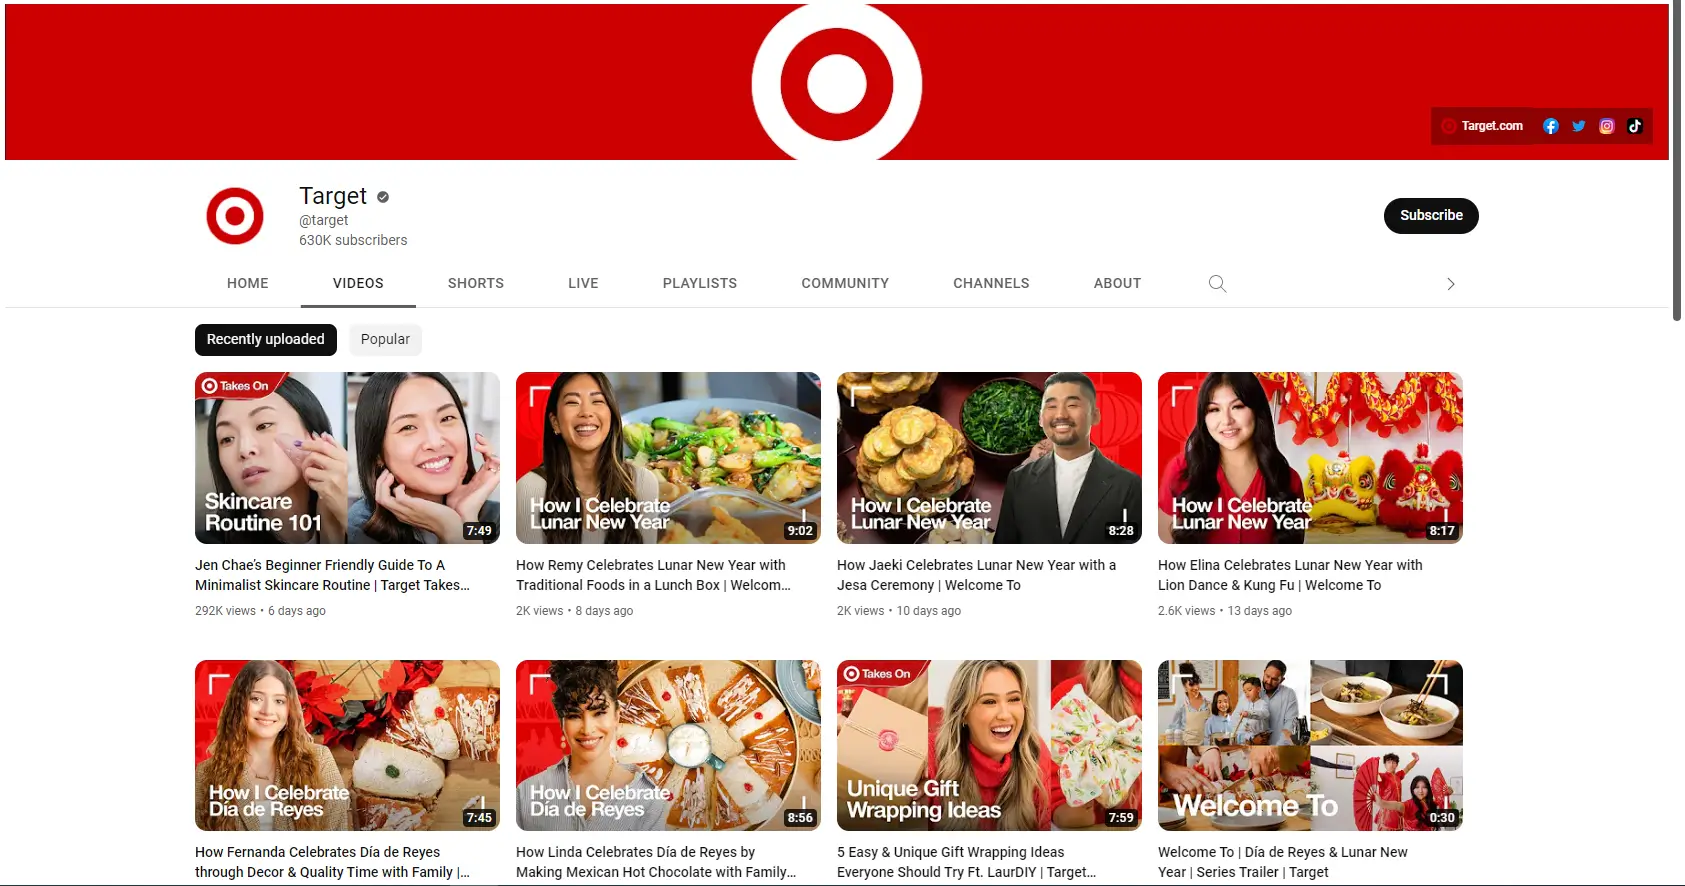 Target's video marketing